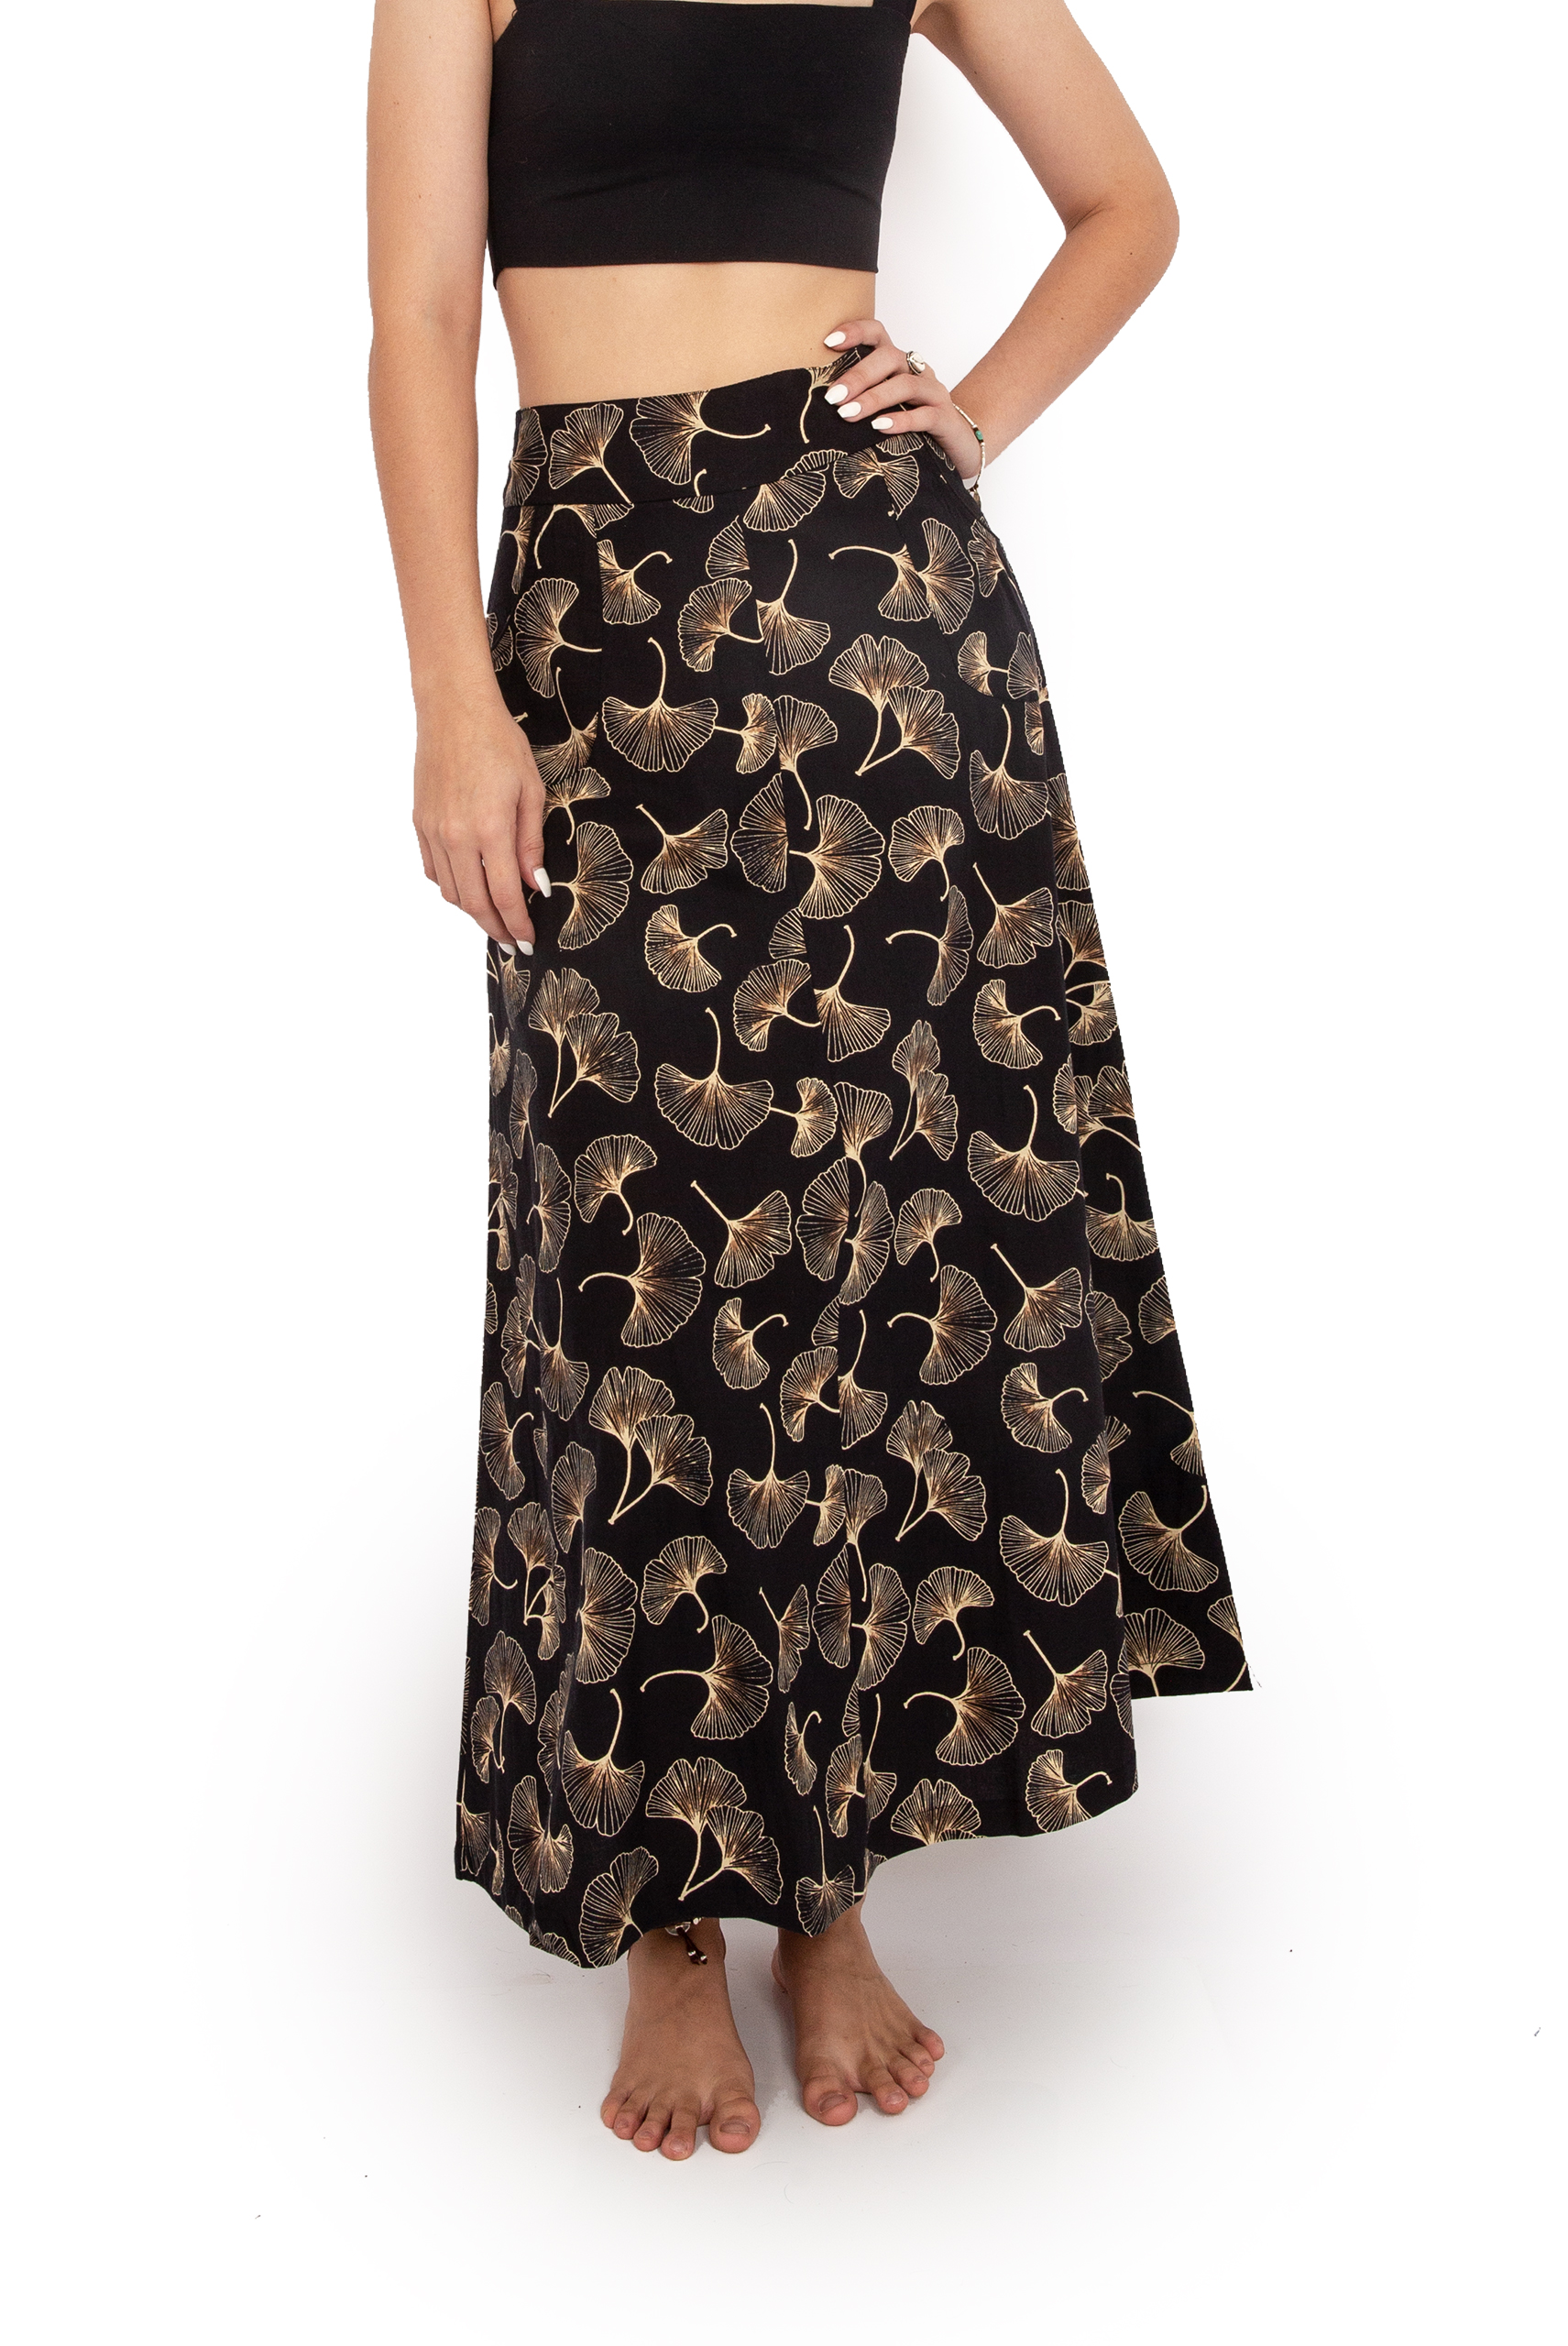 Sita Maxi Skirt - Ginkgo Black - OM Designs